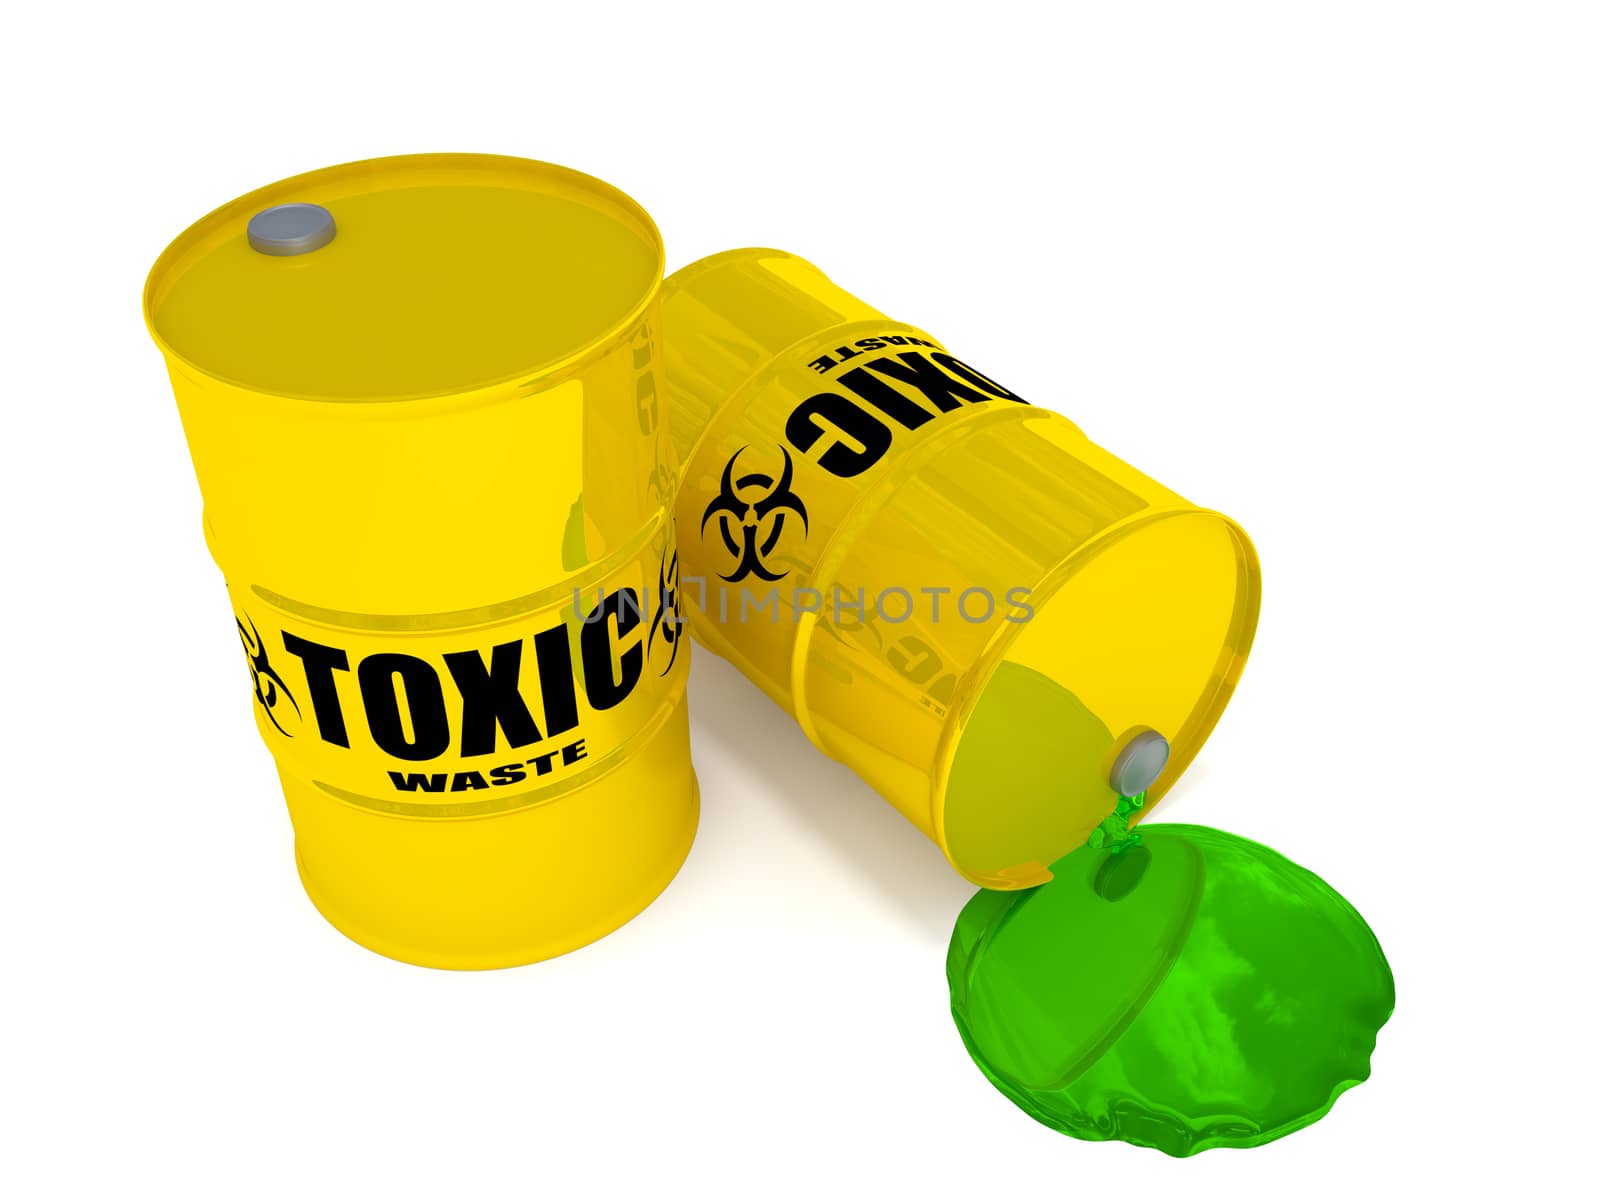 Toxic Waste by tonsnoei